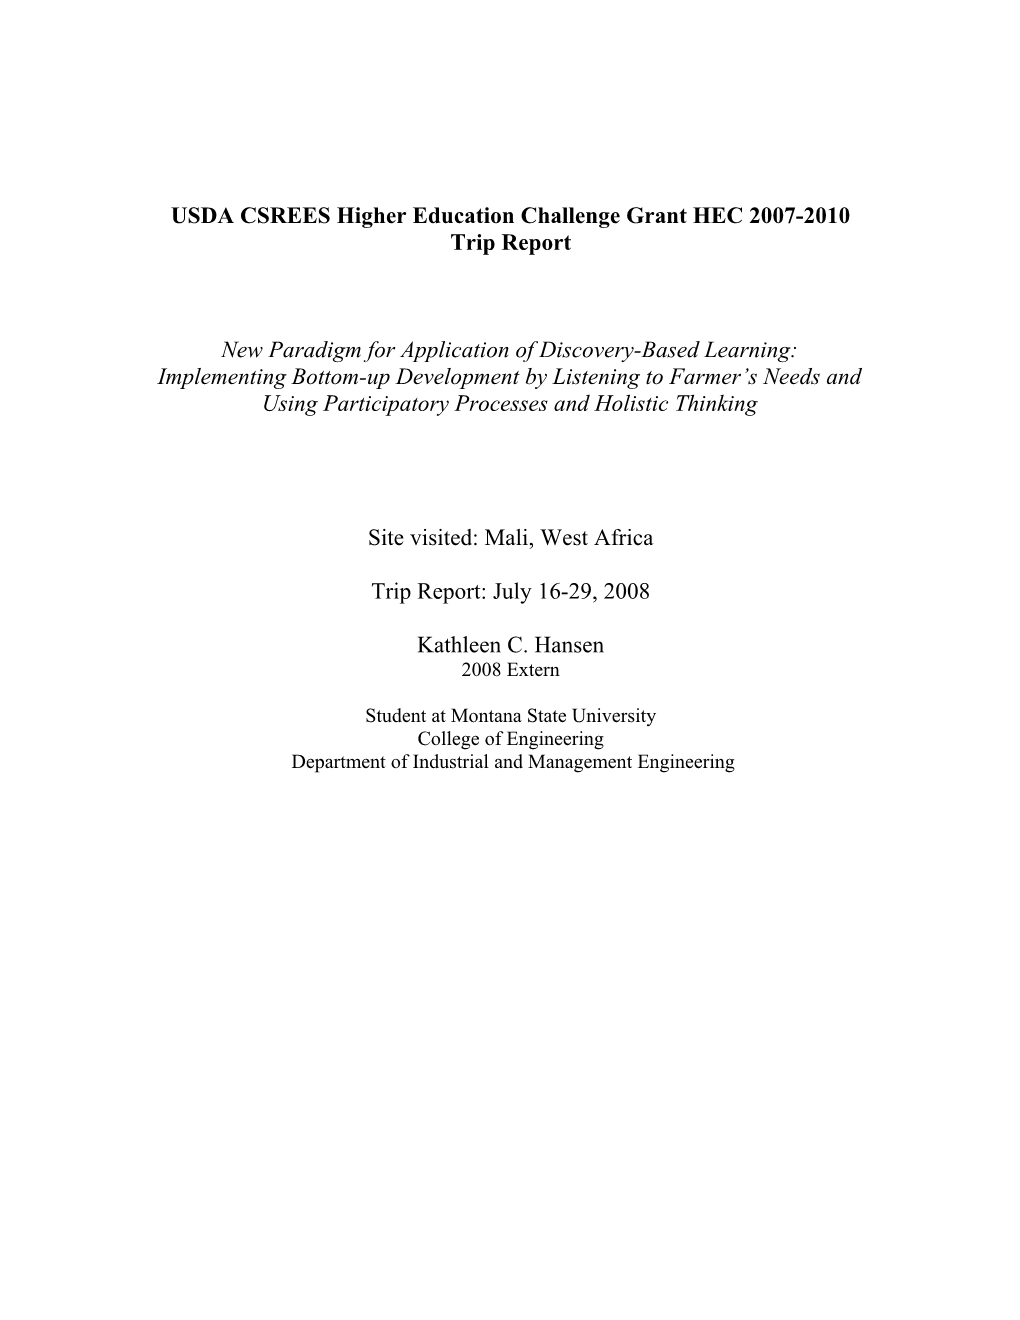 USDA CSREES Higher Education Challenge Grant HEC 2007-2010 Trip Report